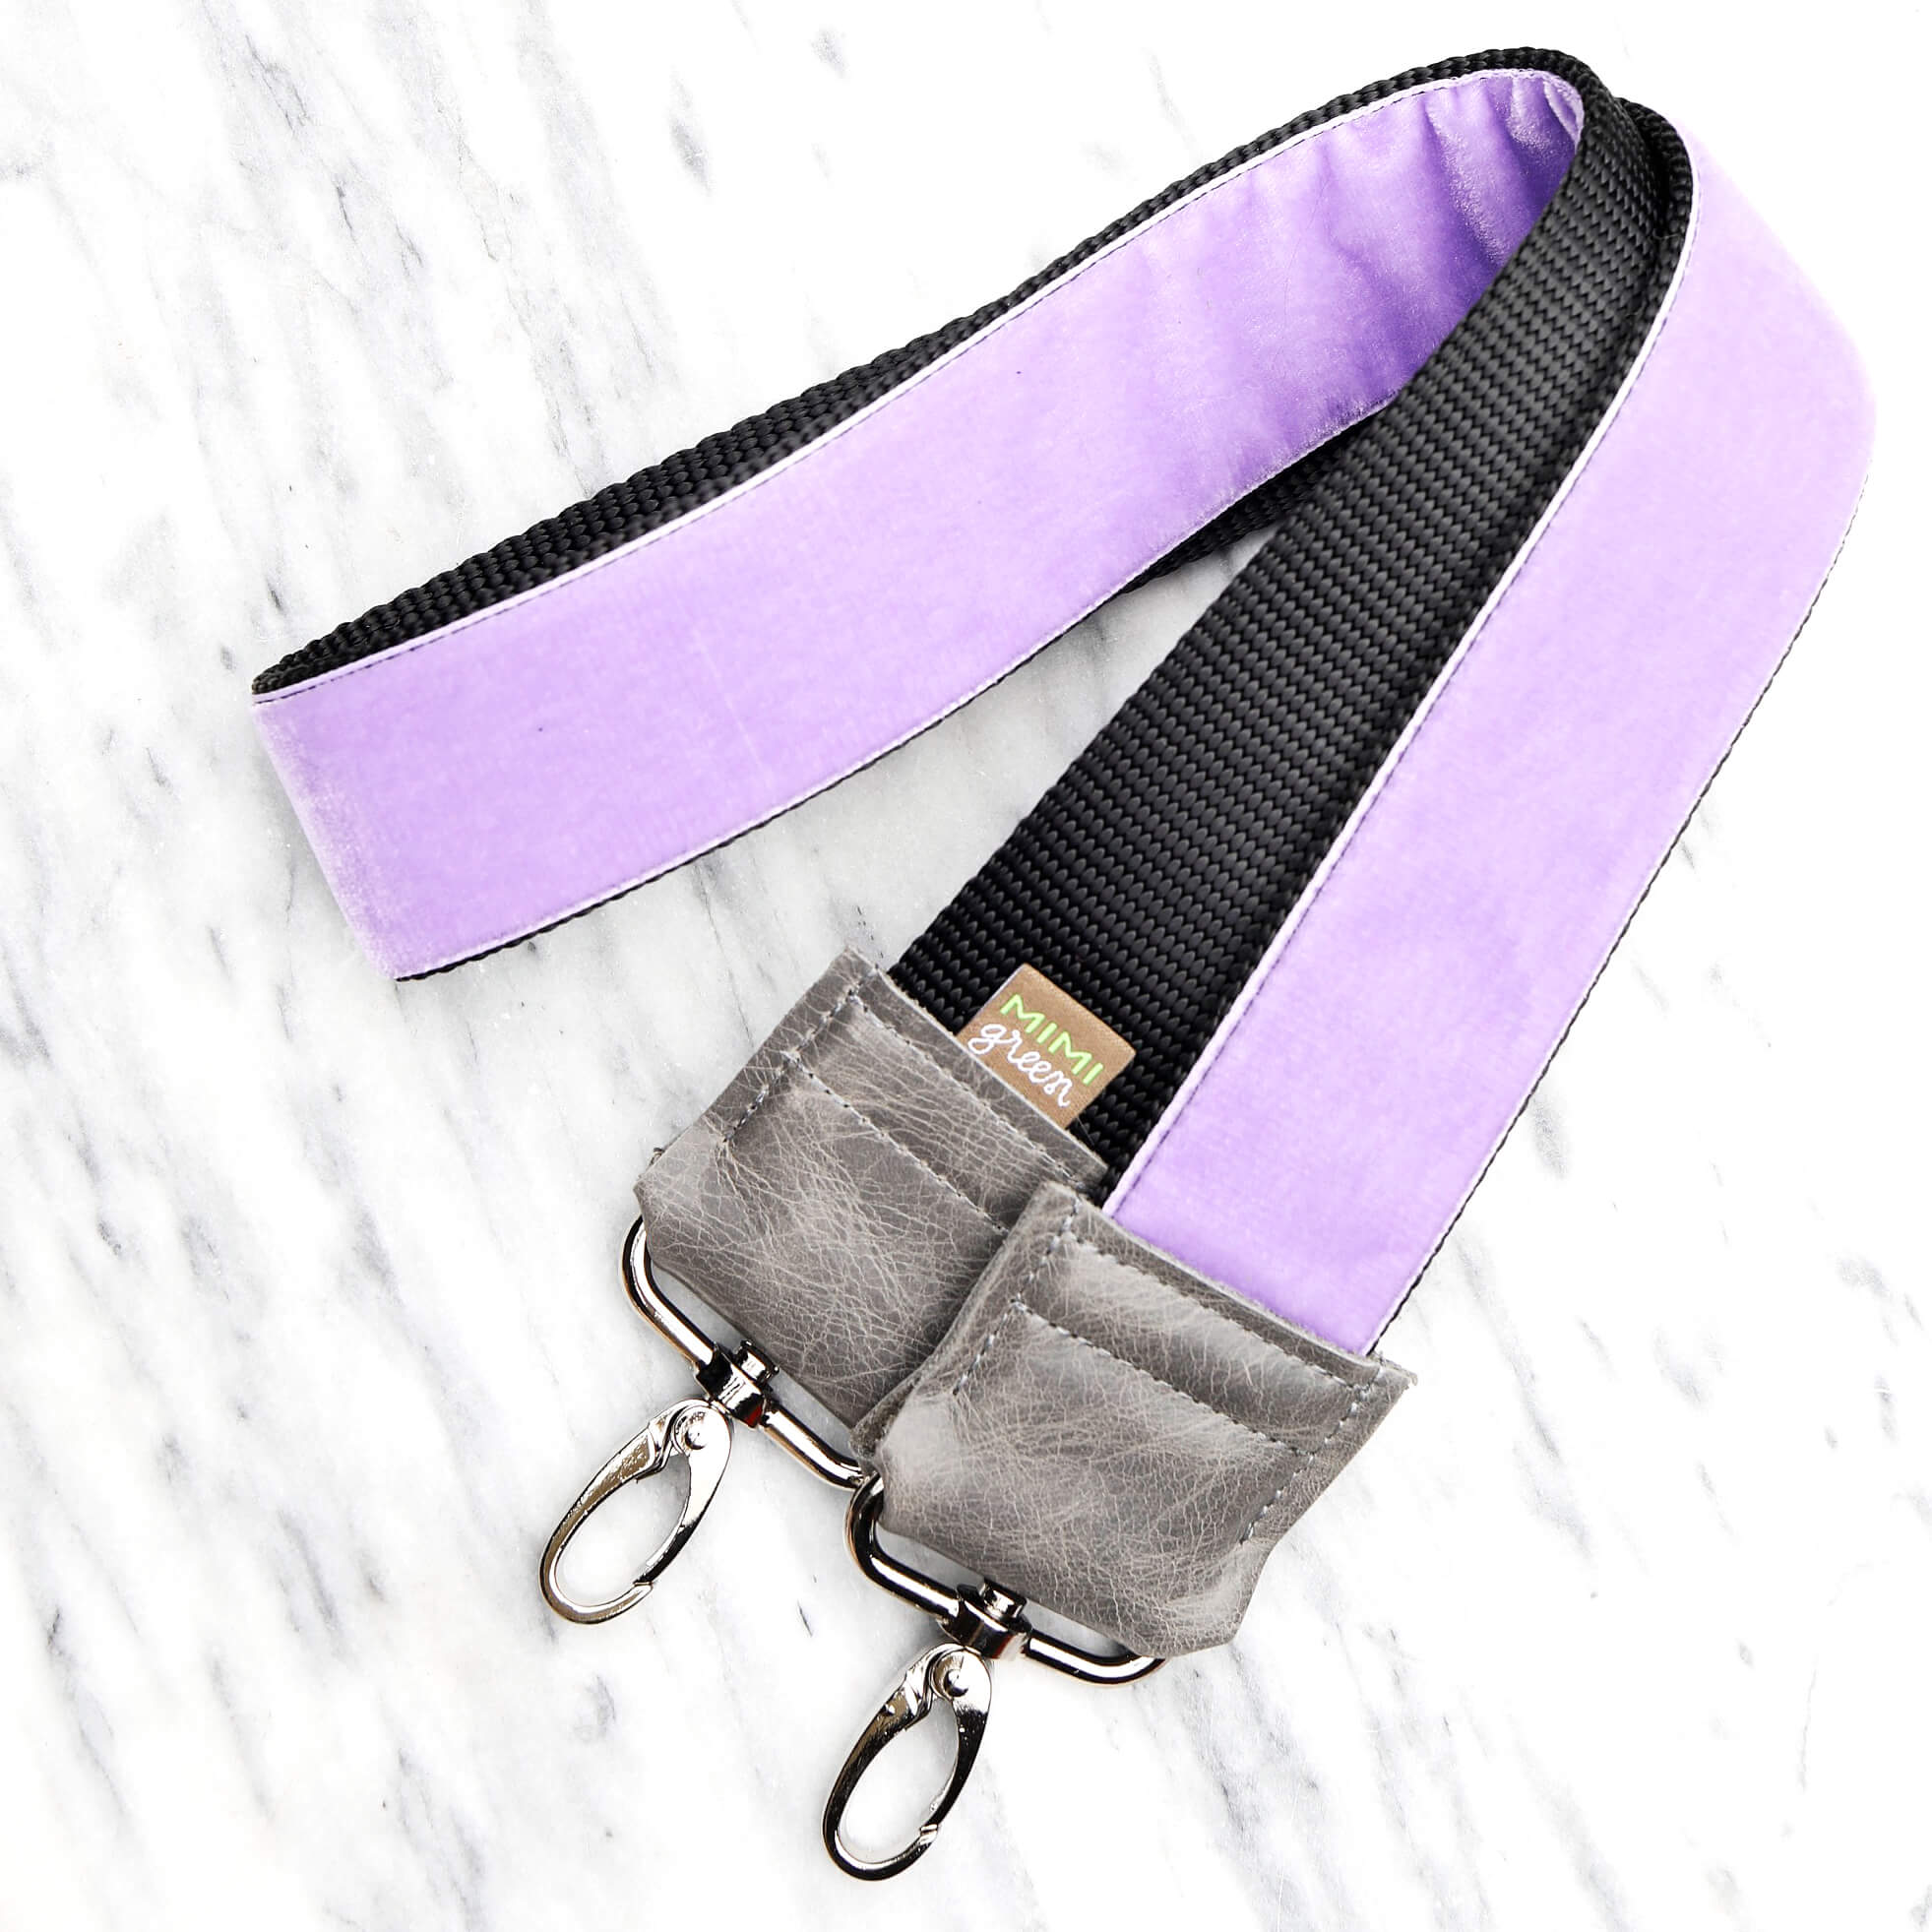 Buy Engraved Shoulder Bag Strap, Replacement Purse Strap Crossbody